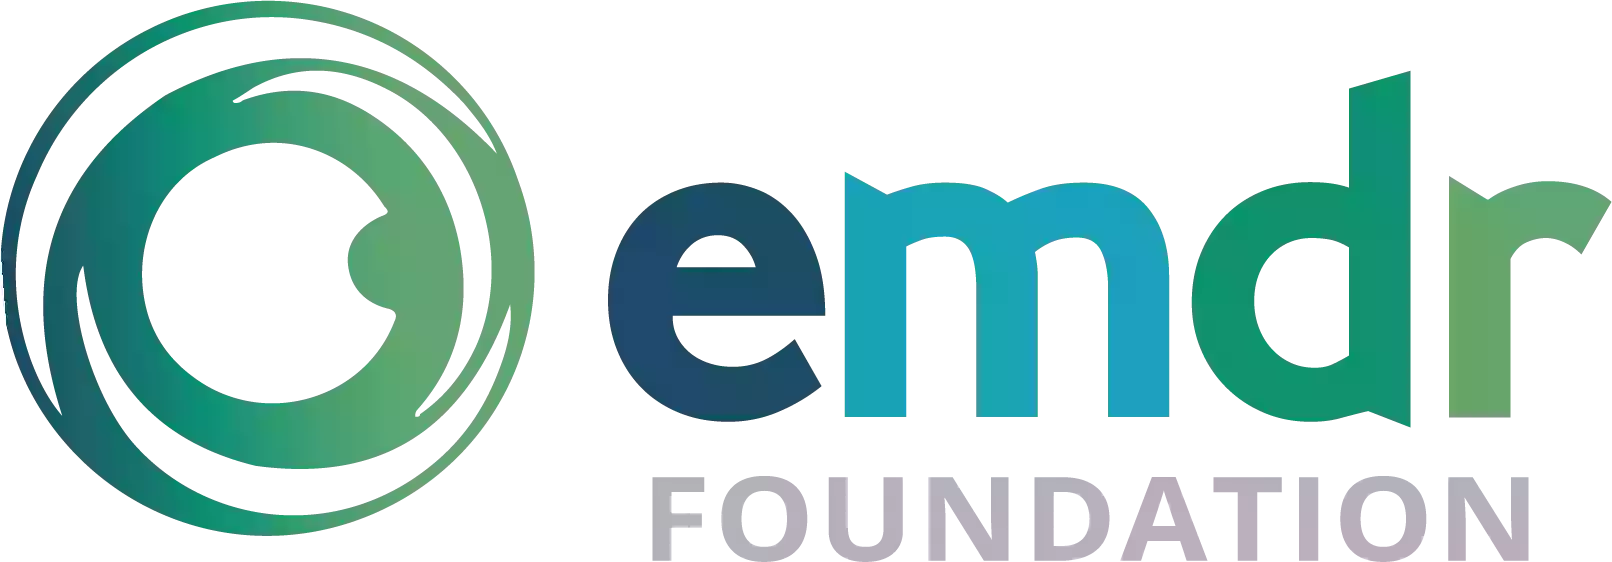 EMDR Research Foundation